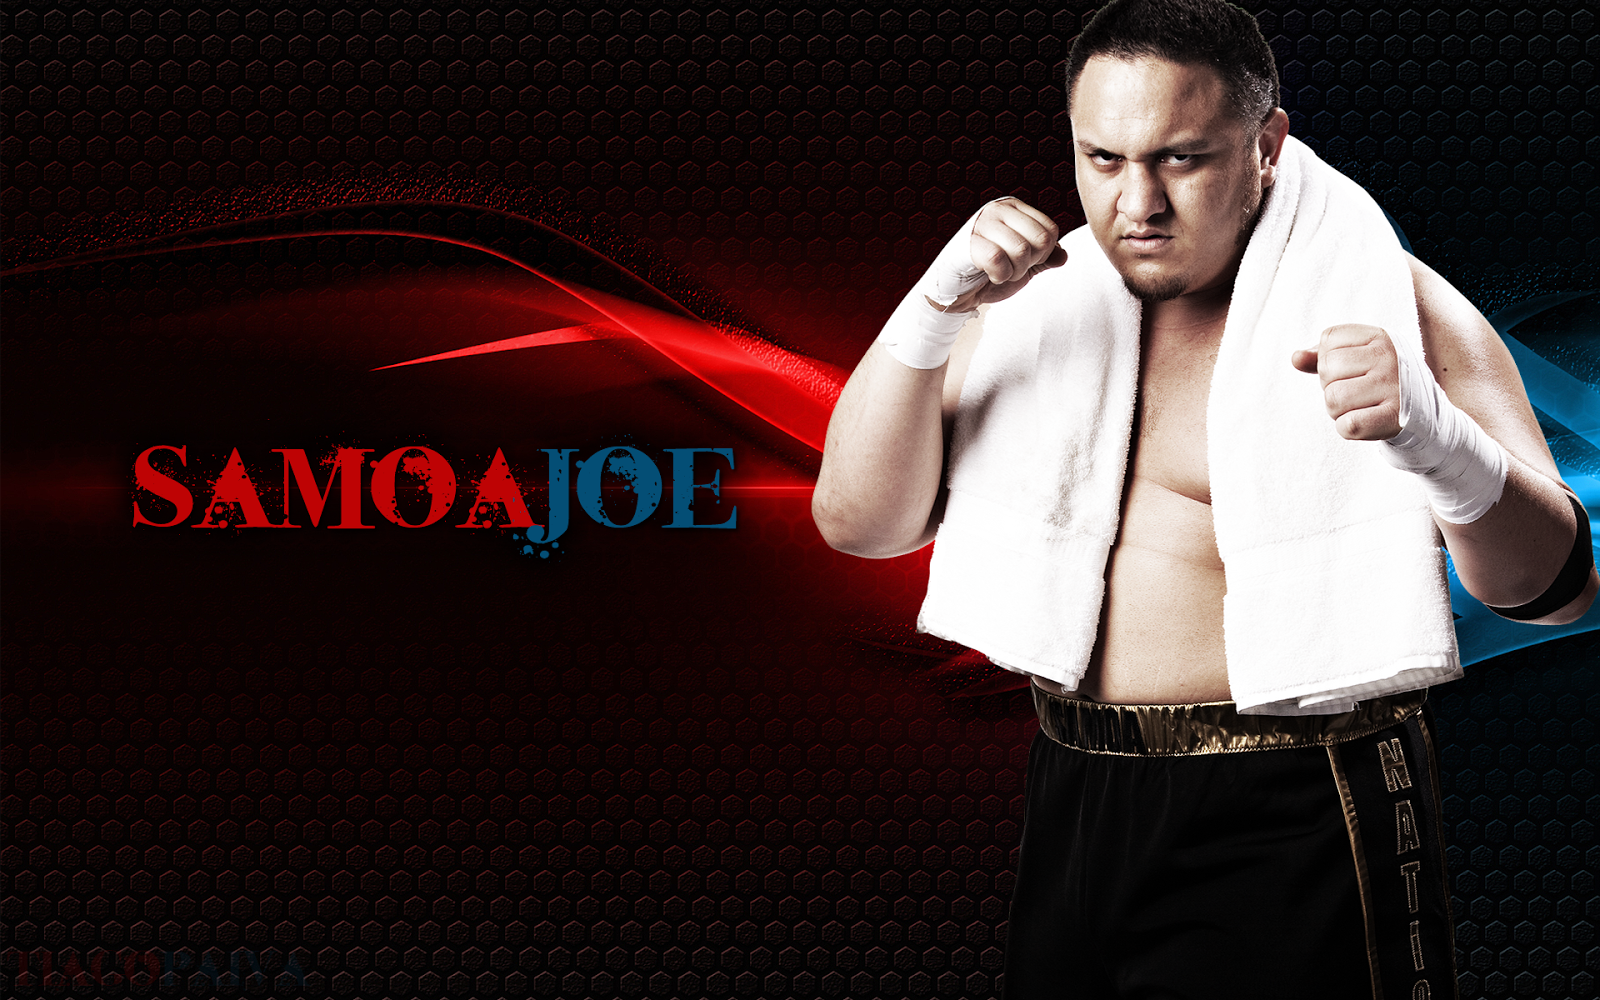 Samoa Joe Hd Wallpapers Free Download WWE HD WALLPAPER FREE DOWNLOAD